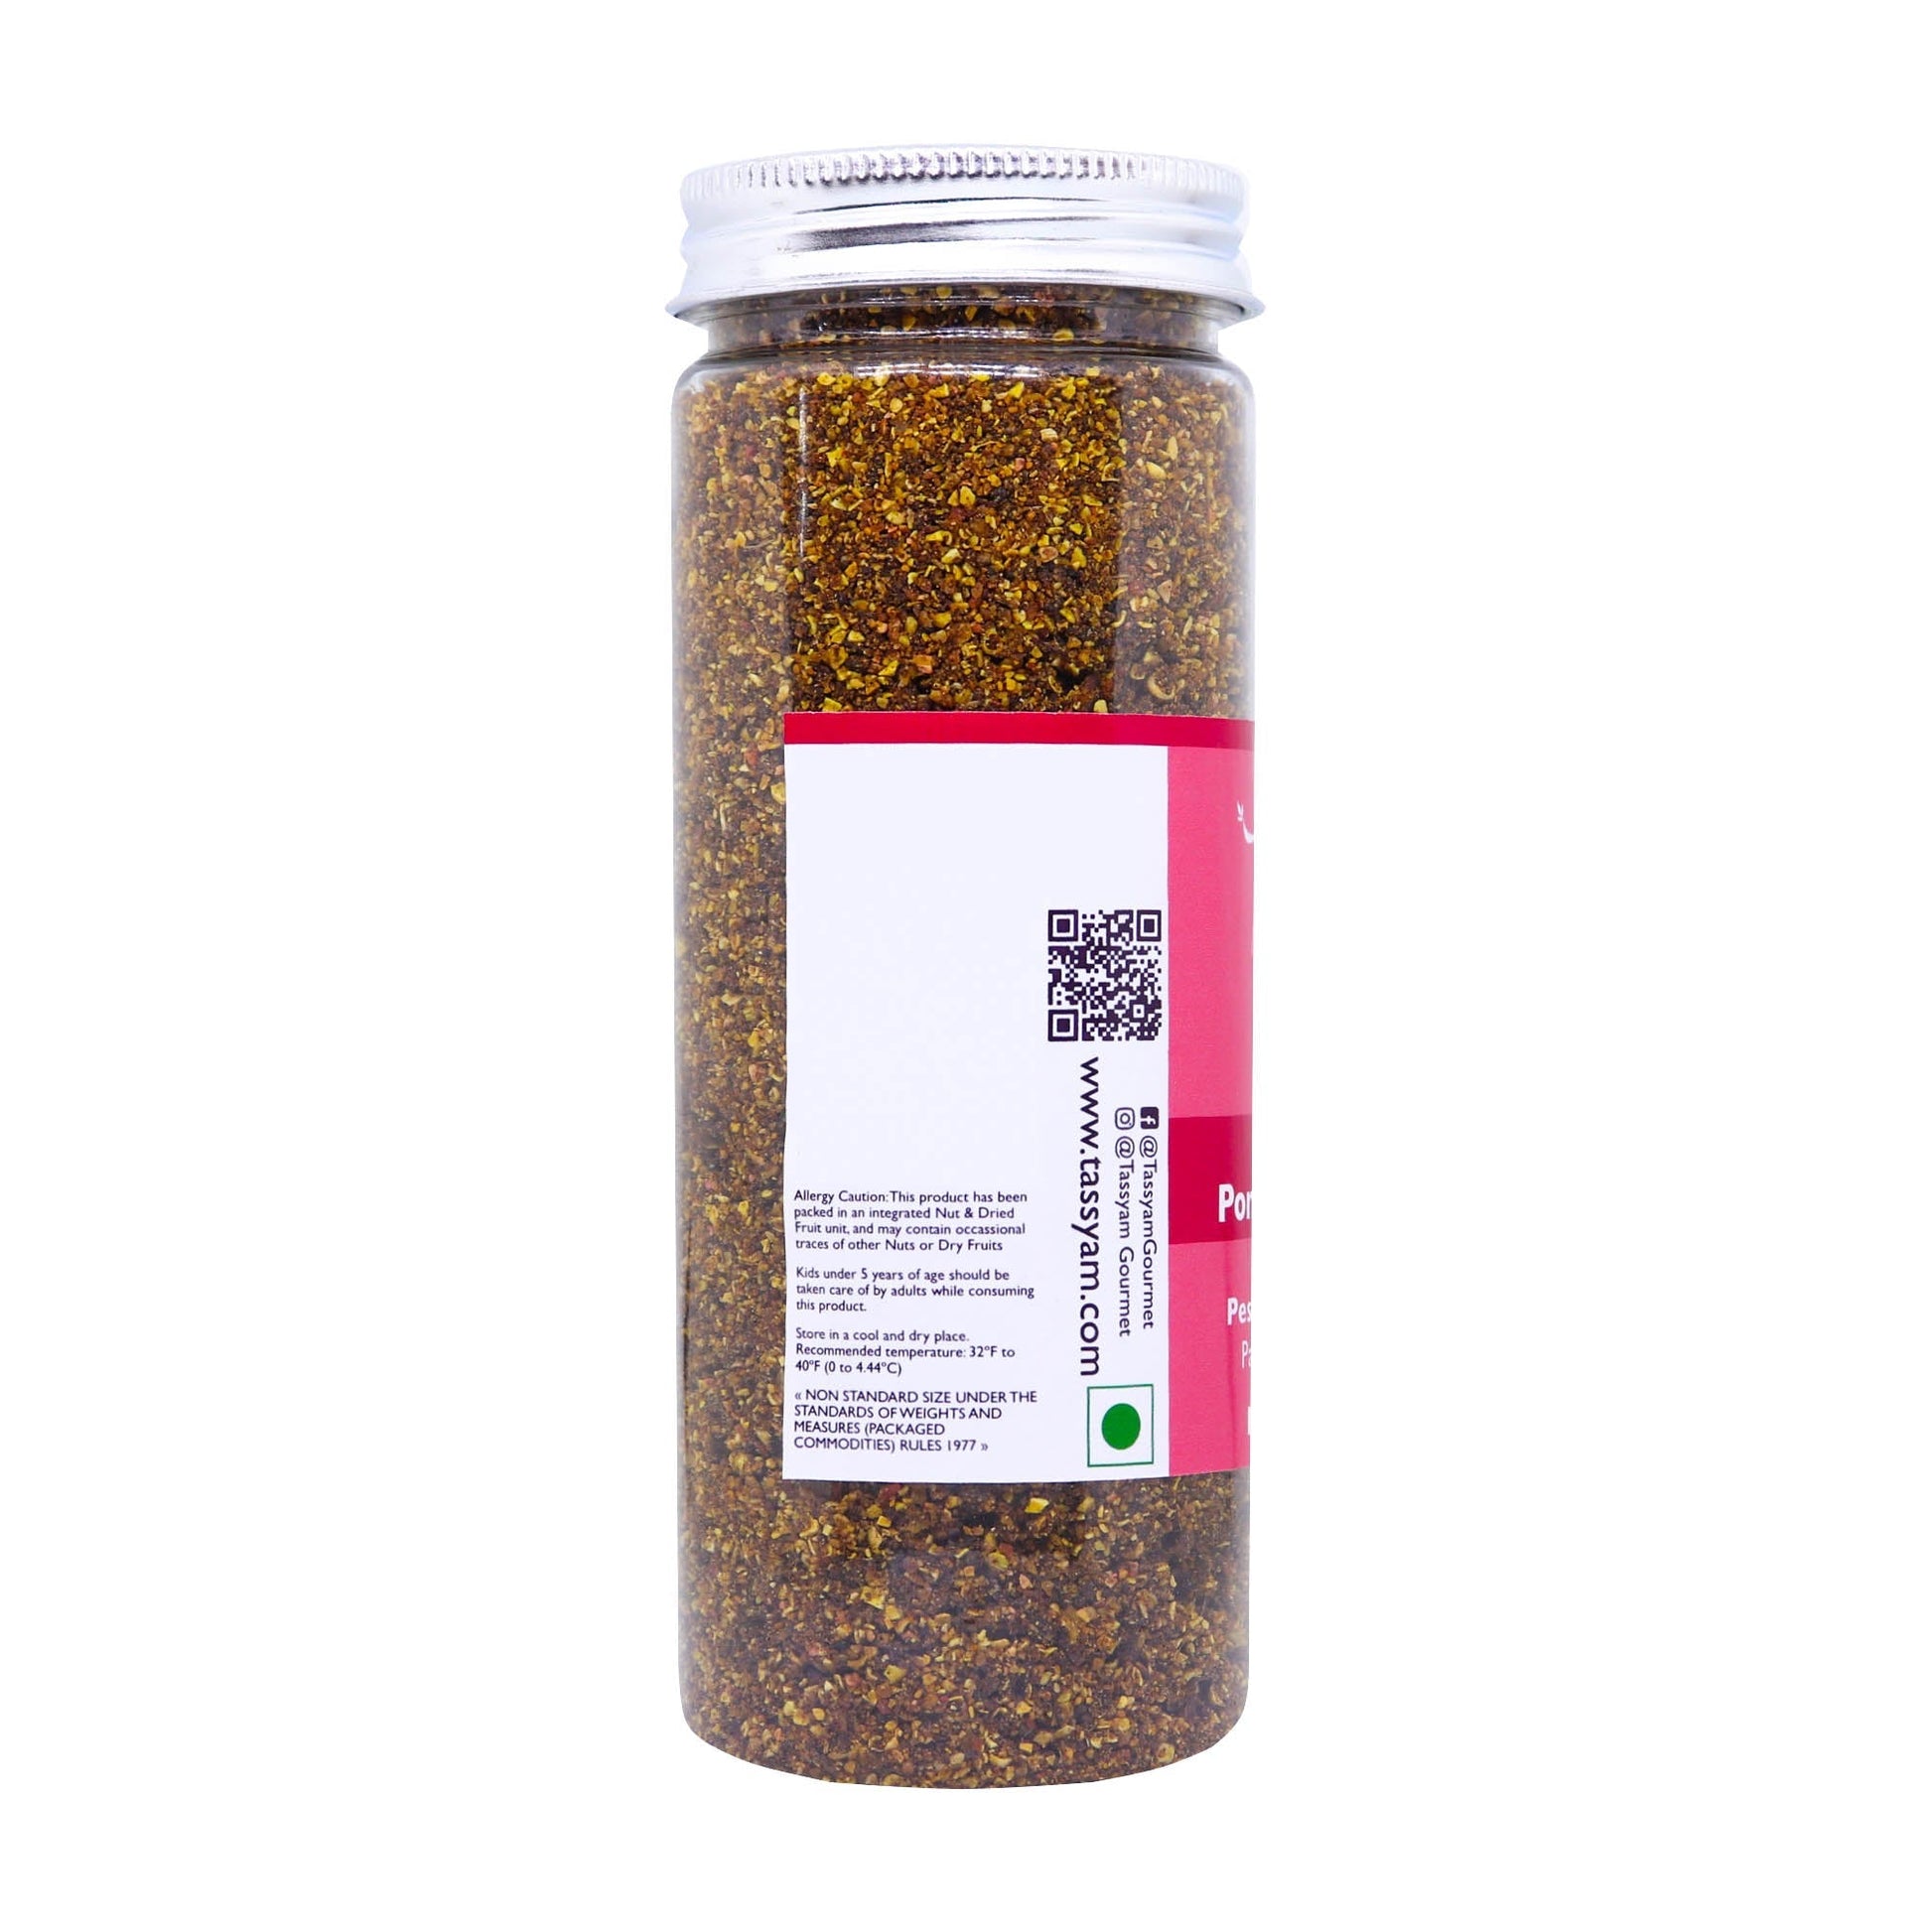 Anardana Ground 200g (Dried Pomegranate Arils) - Tassyam Organics